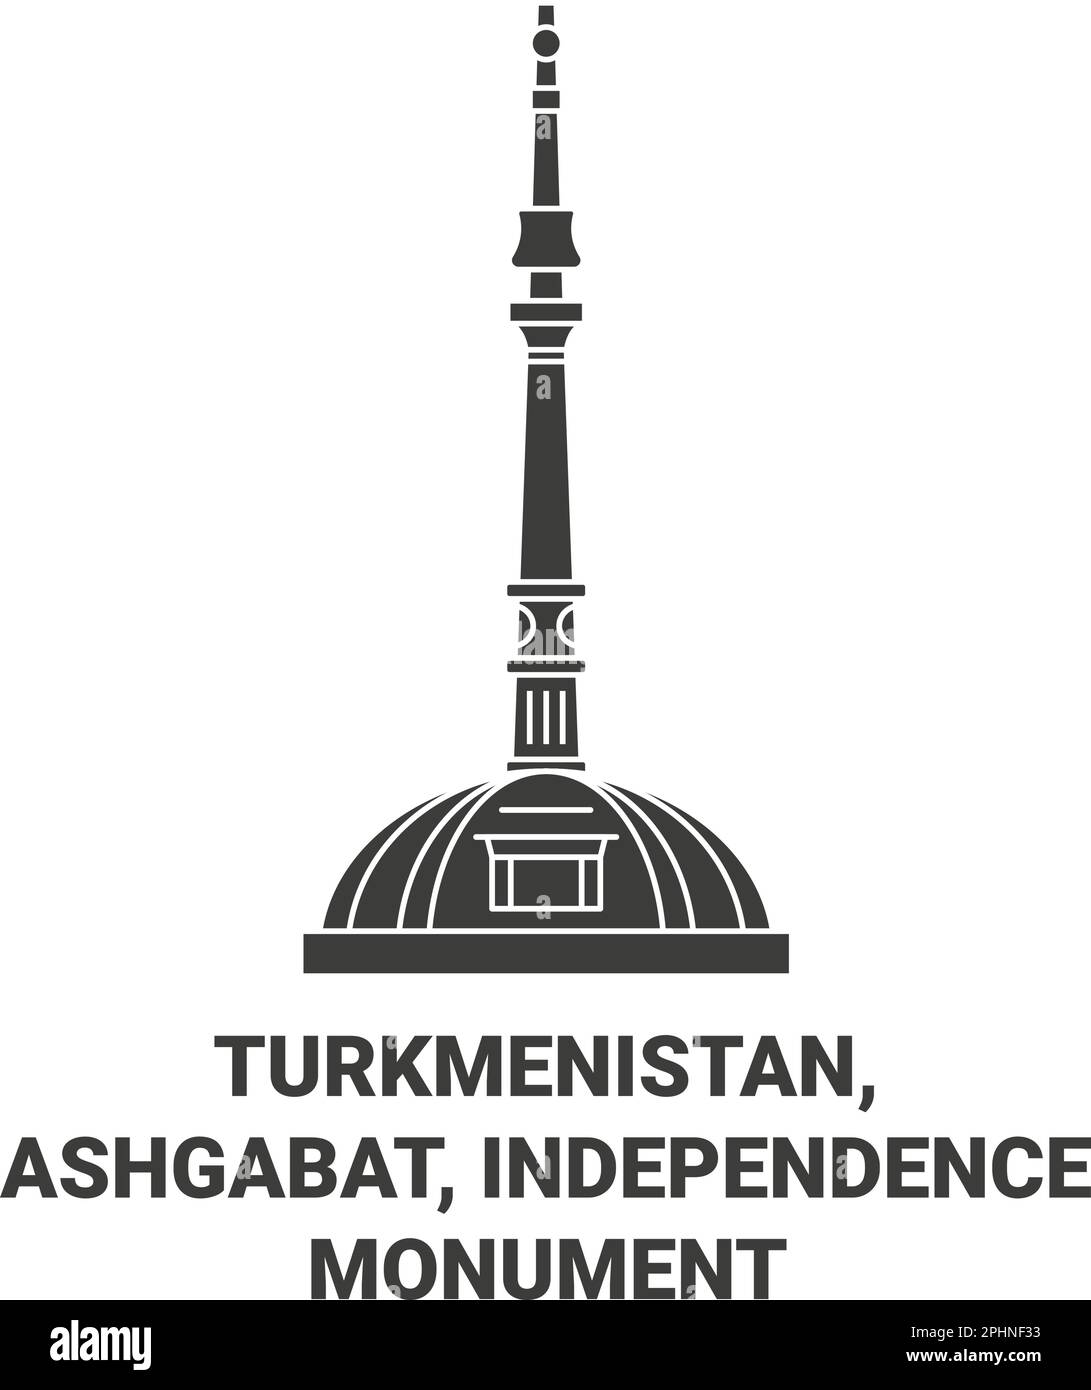 Turkmenistan, Ashgabat, Independence Monument viaggio punto di riferimento vettoriale illustrazione Illustrazione Vettoriale